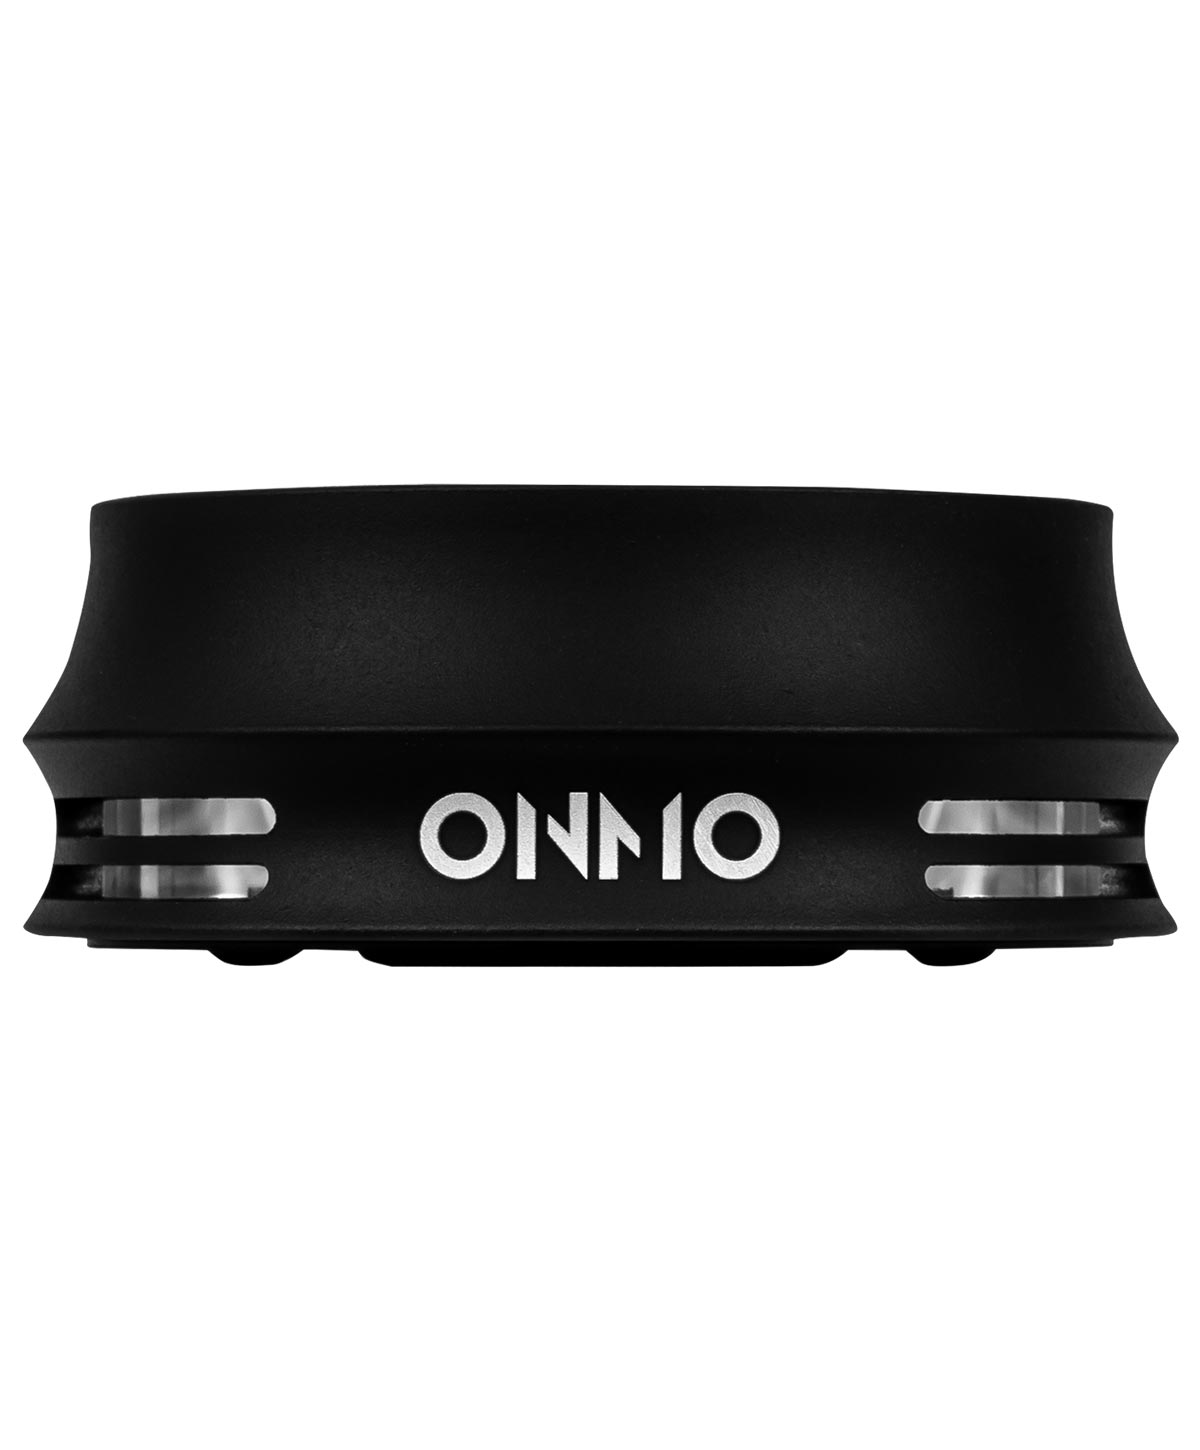 ONMO HMD - Black